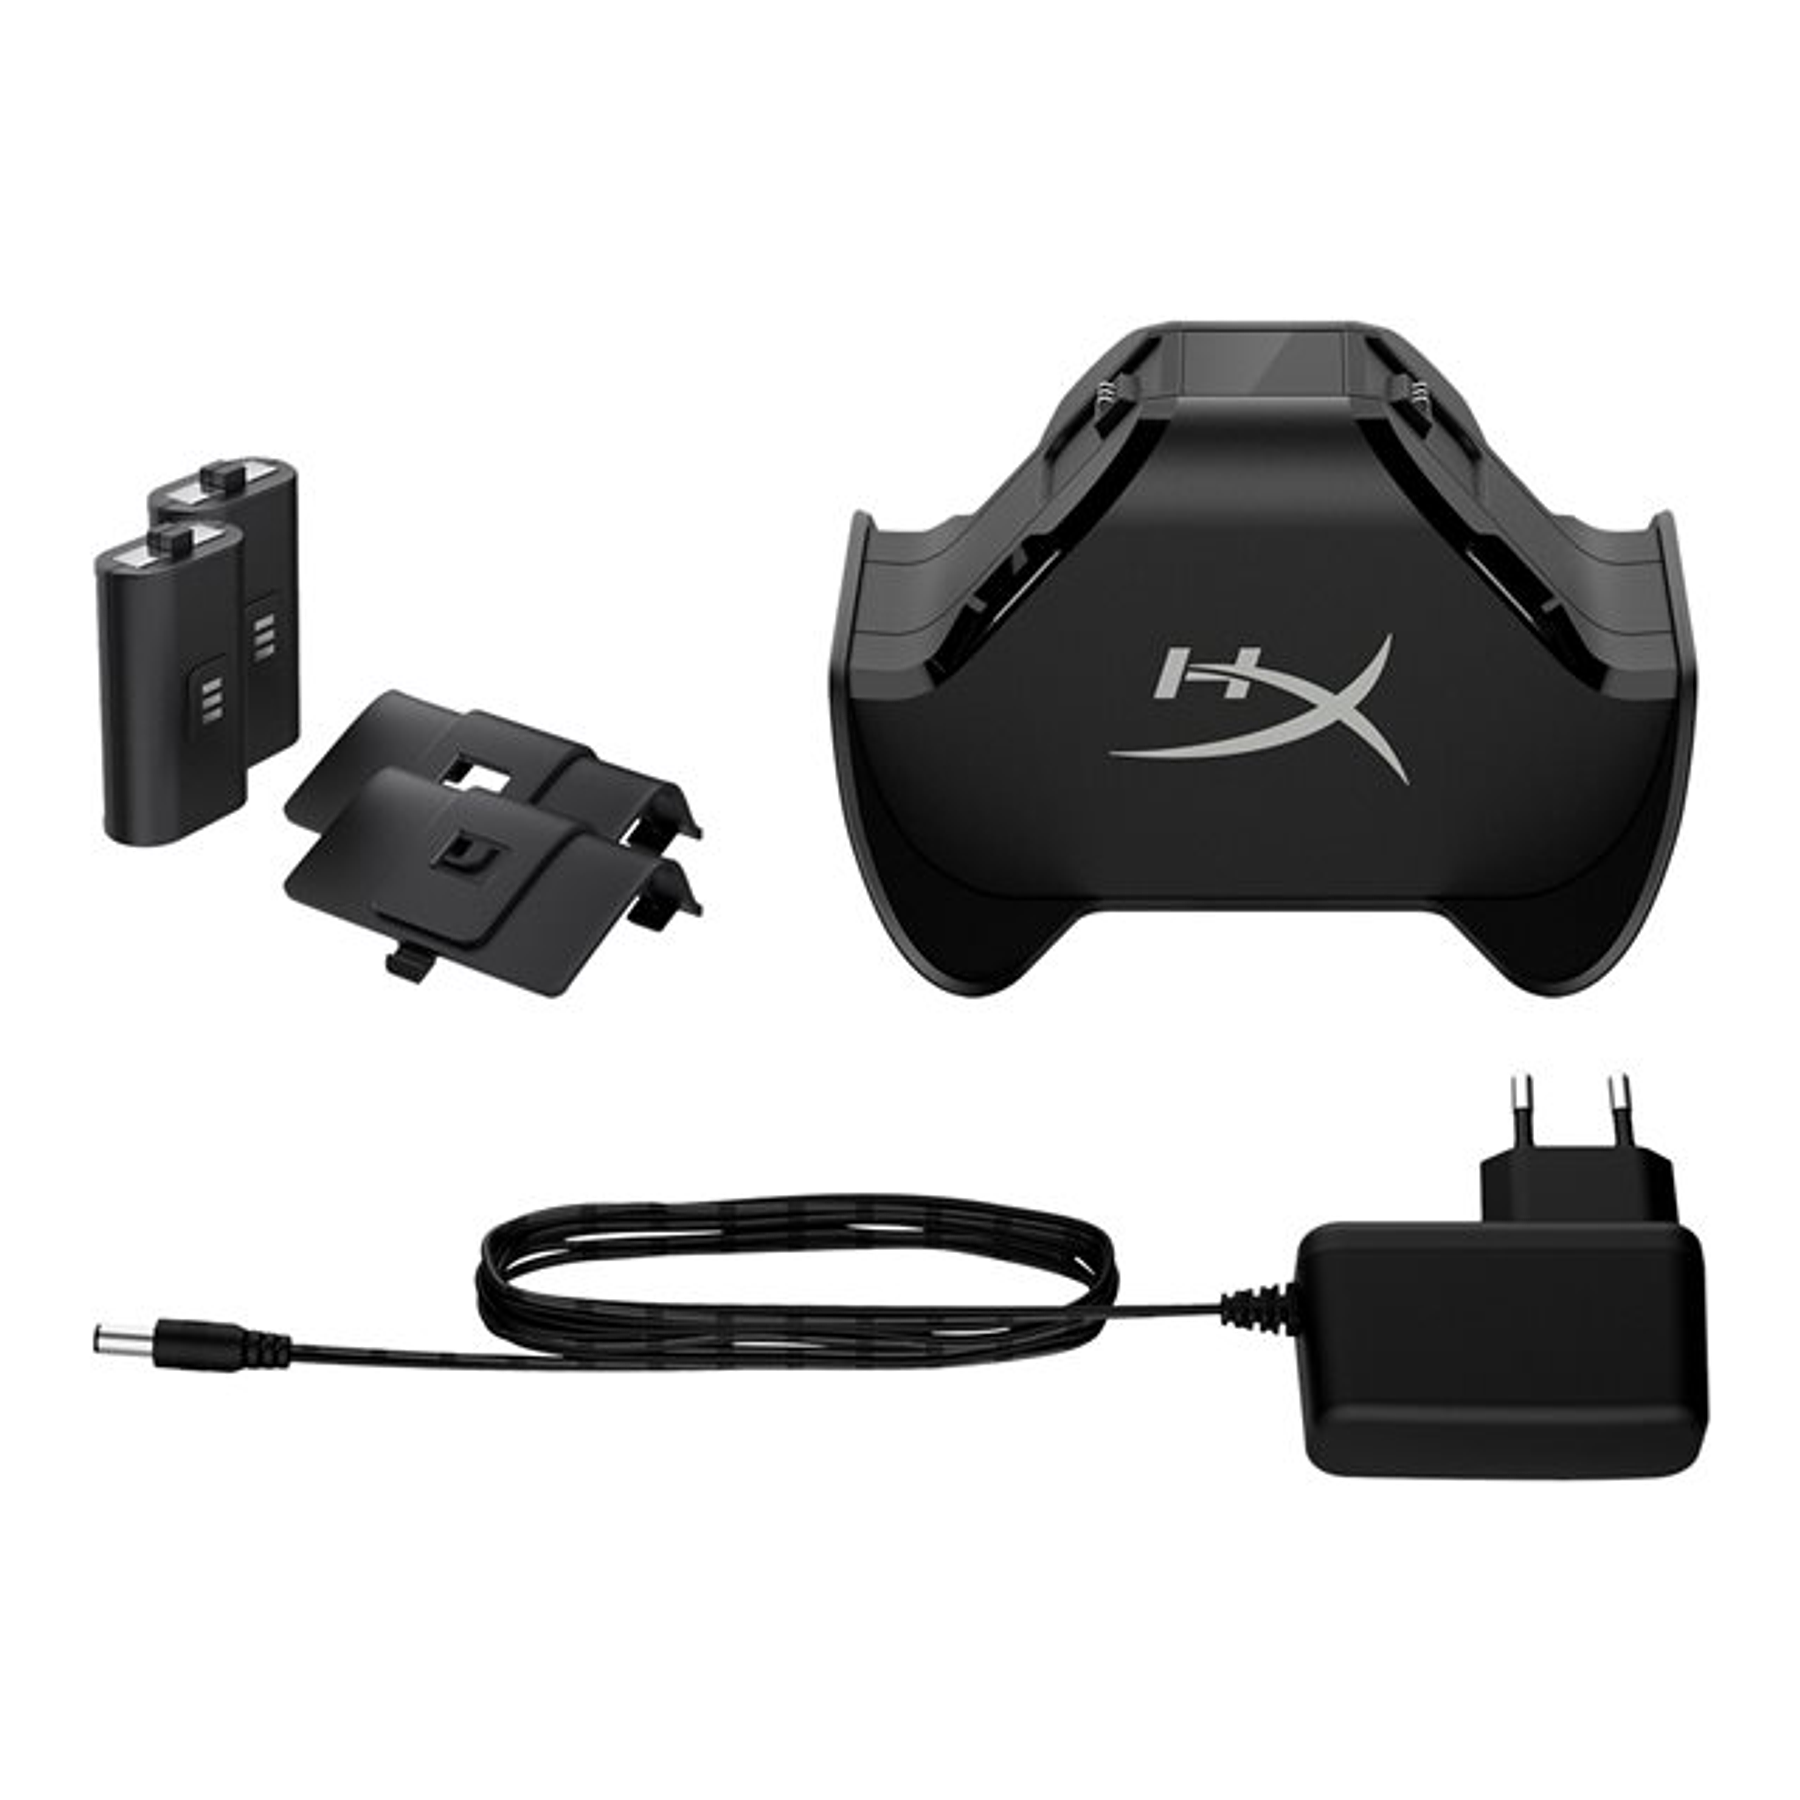 HyperX Cargador CharguePlay Duo P-Xbox 1400mAh cable 2m